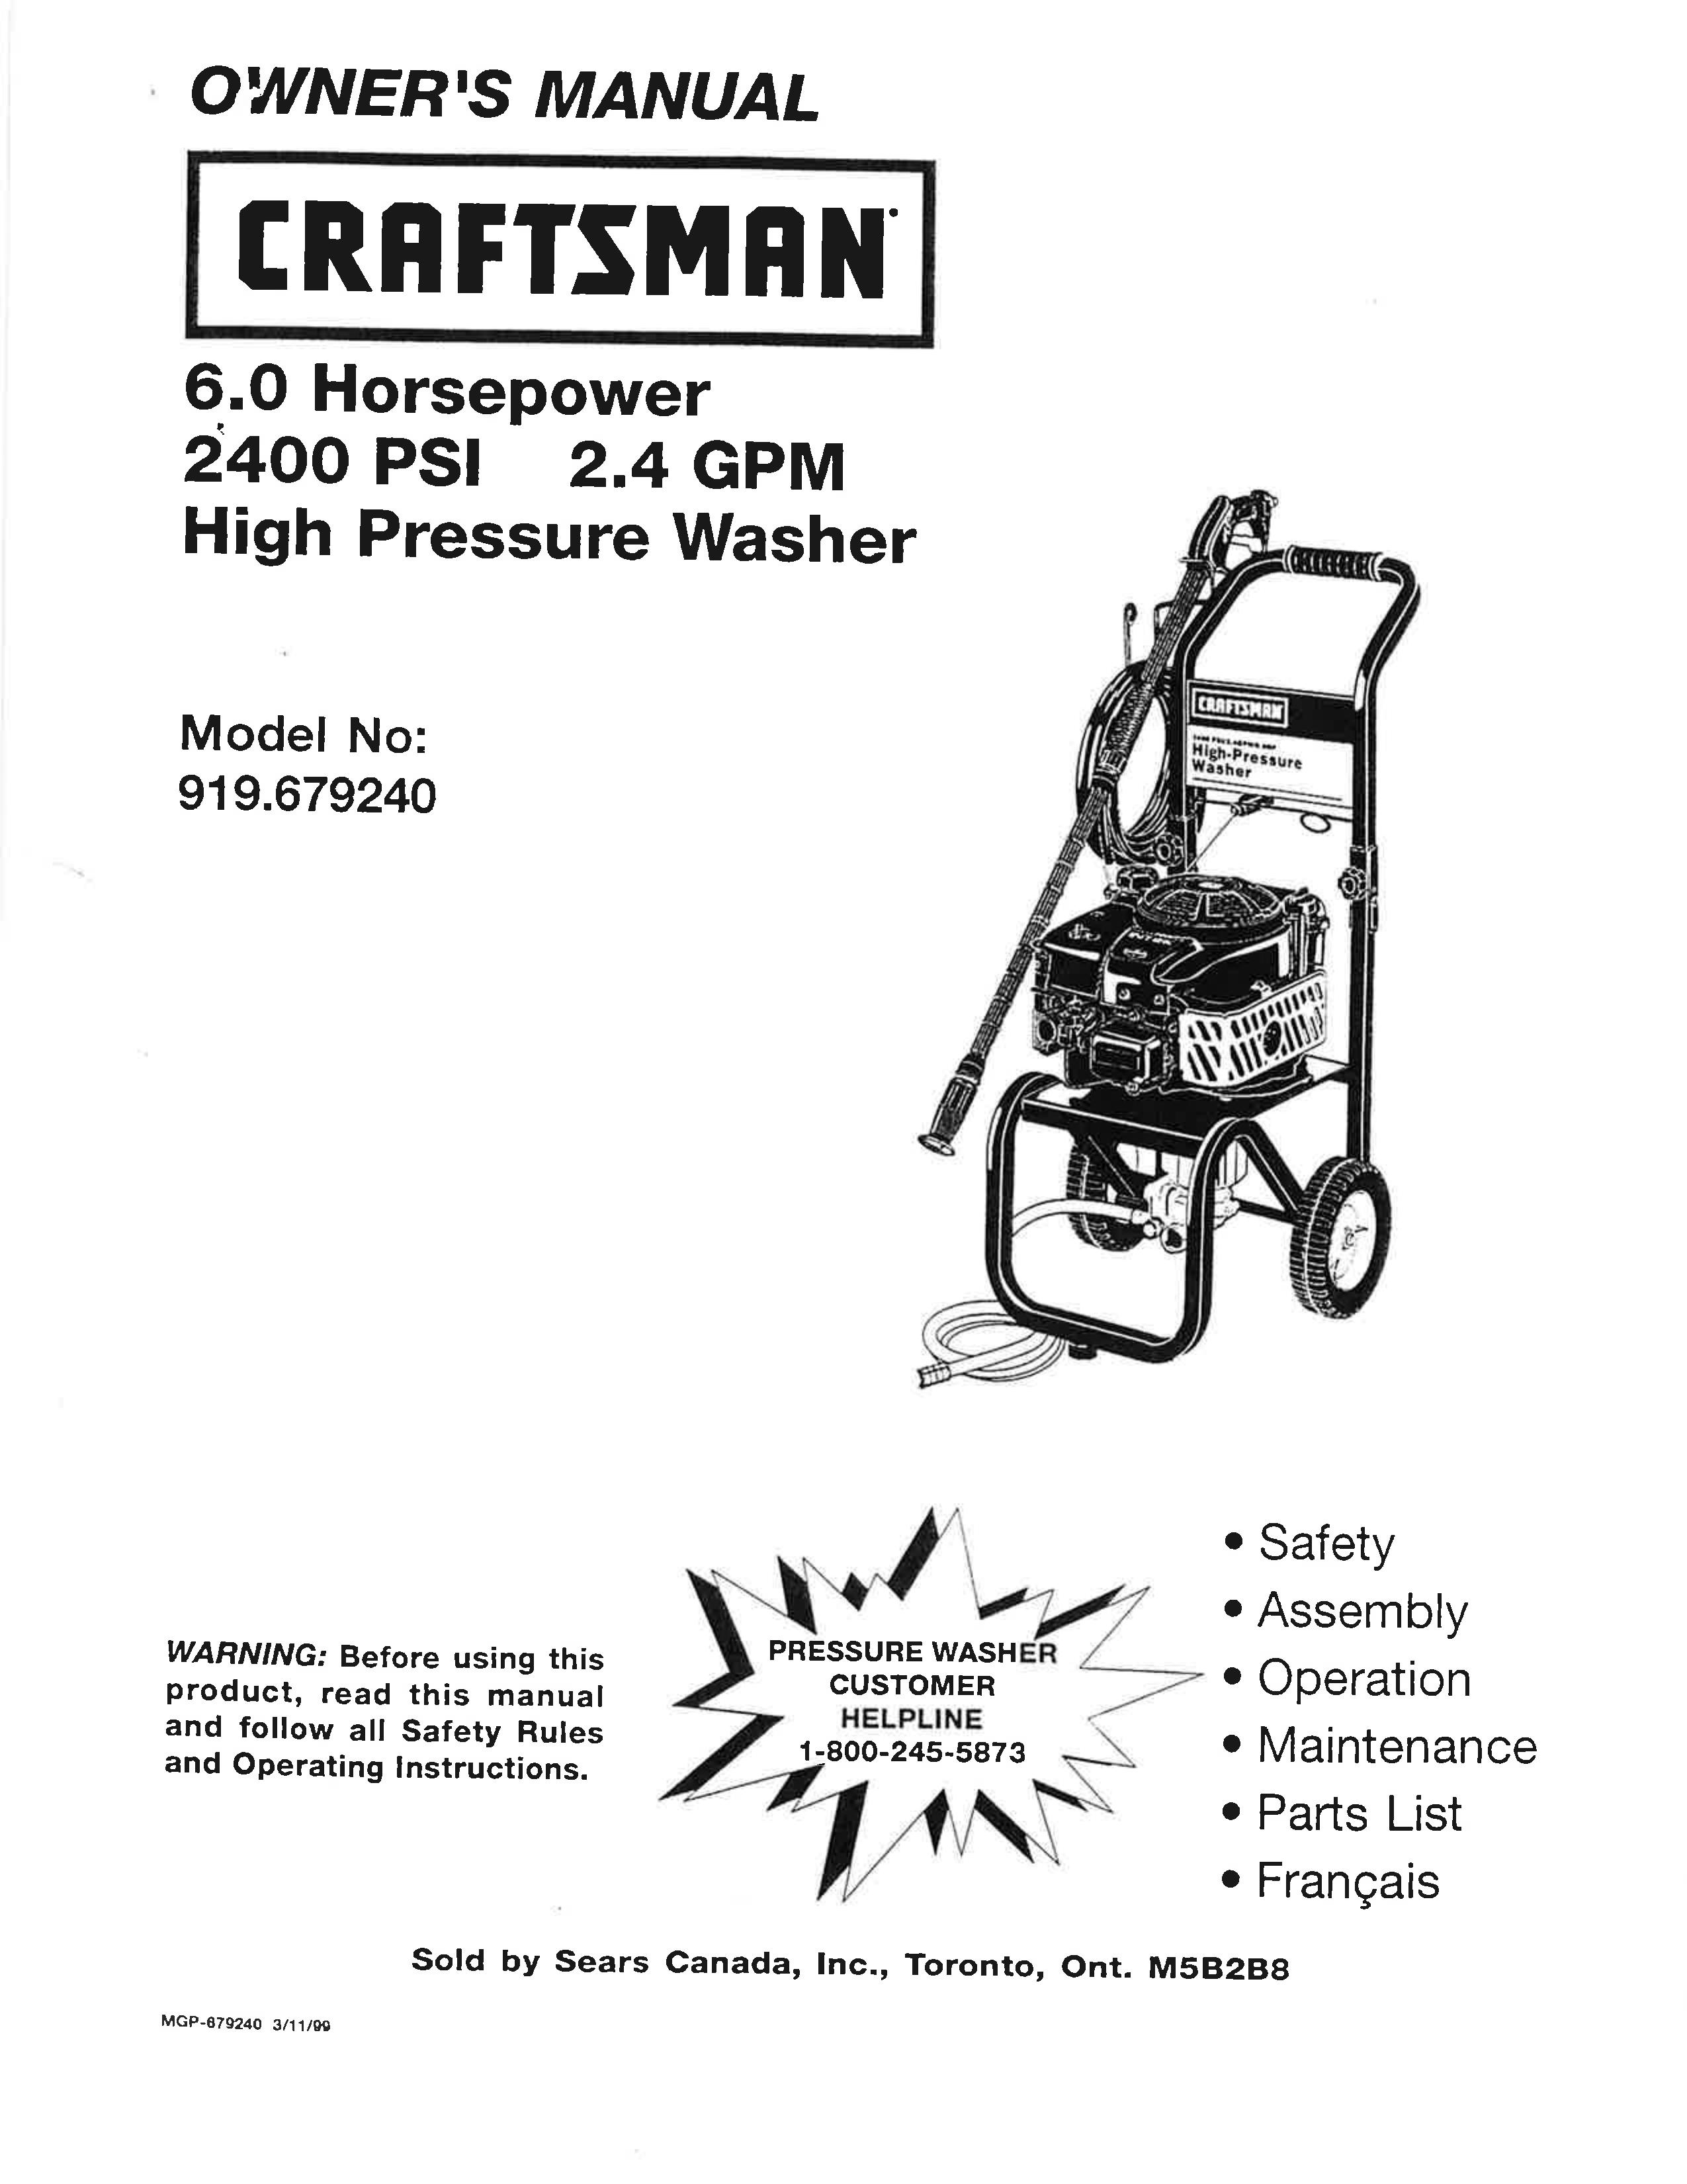 Craftsman 919.679240 Pressure Washer User Manual